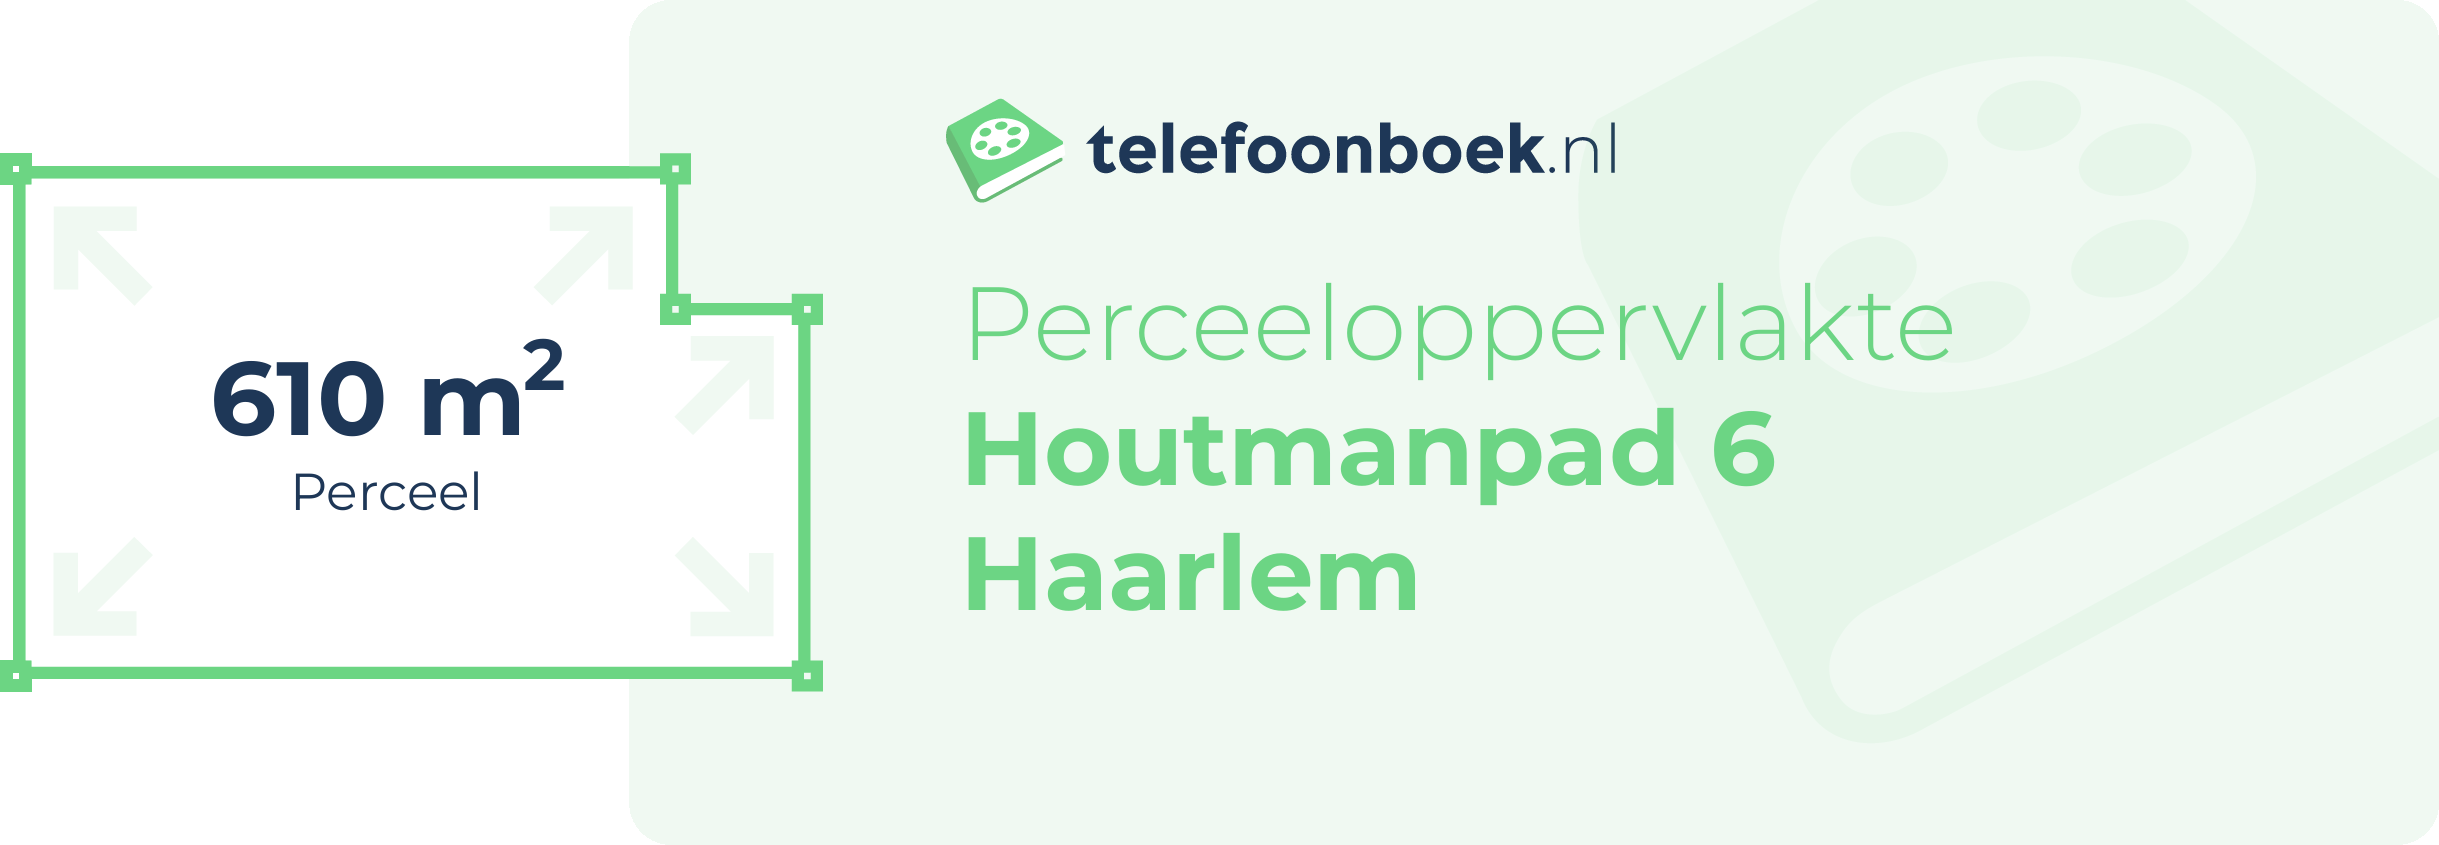 Perceeloppervlakte Houtmanpad 6 Haarlem